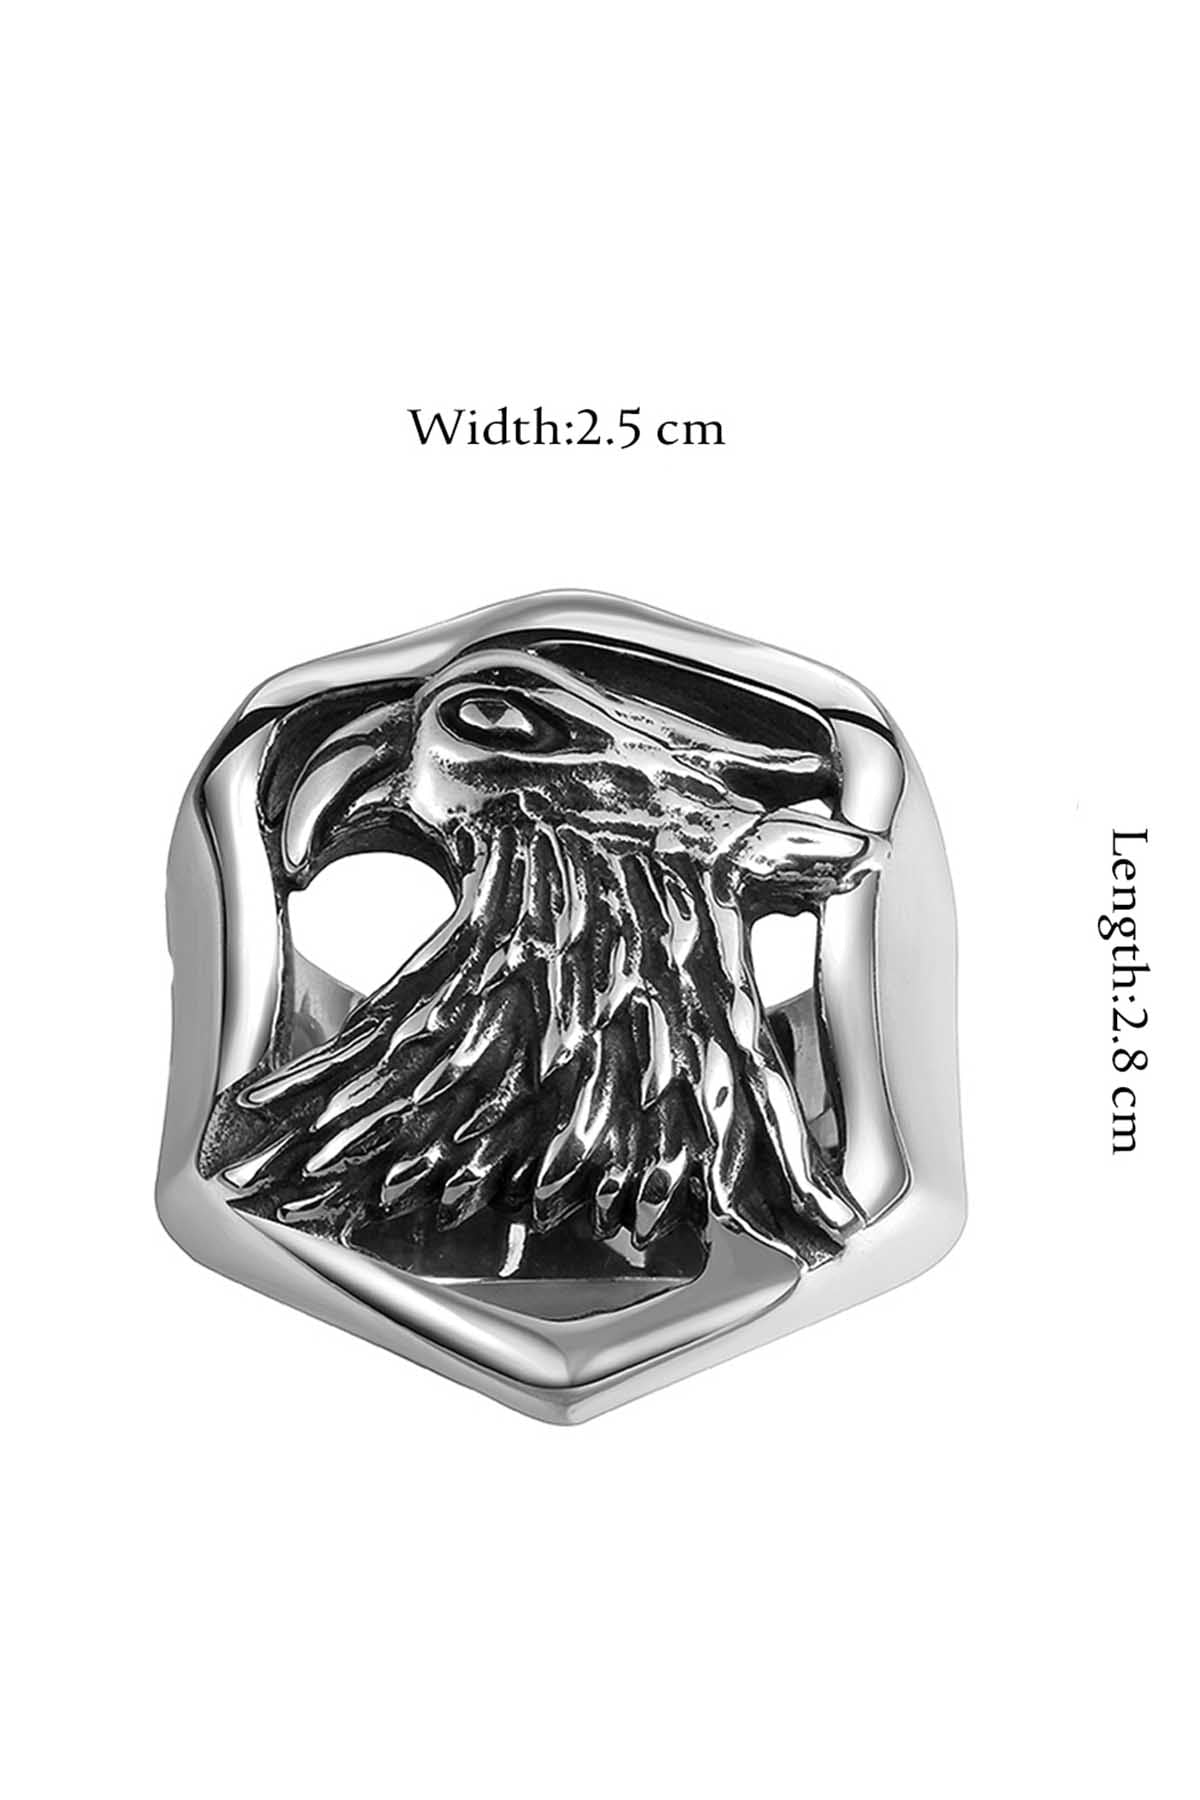 Gomaya Eagle Head Stainless Steel Ring